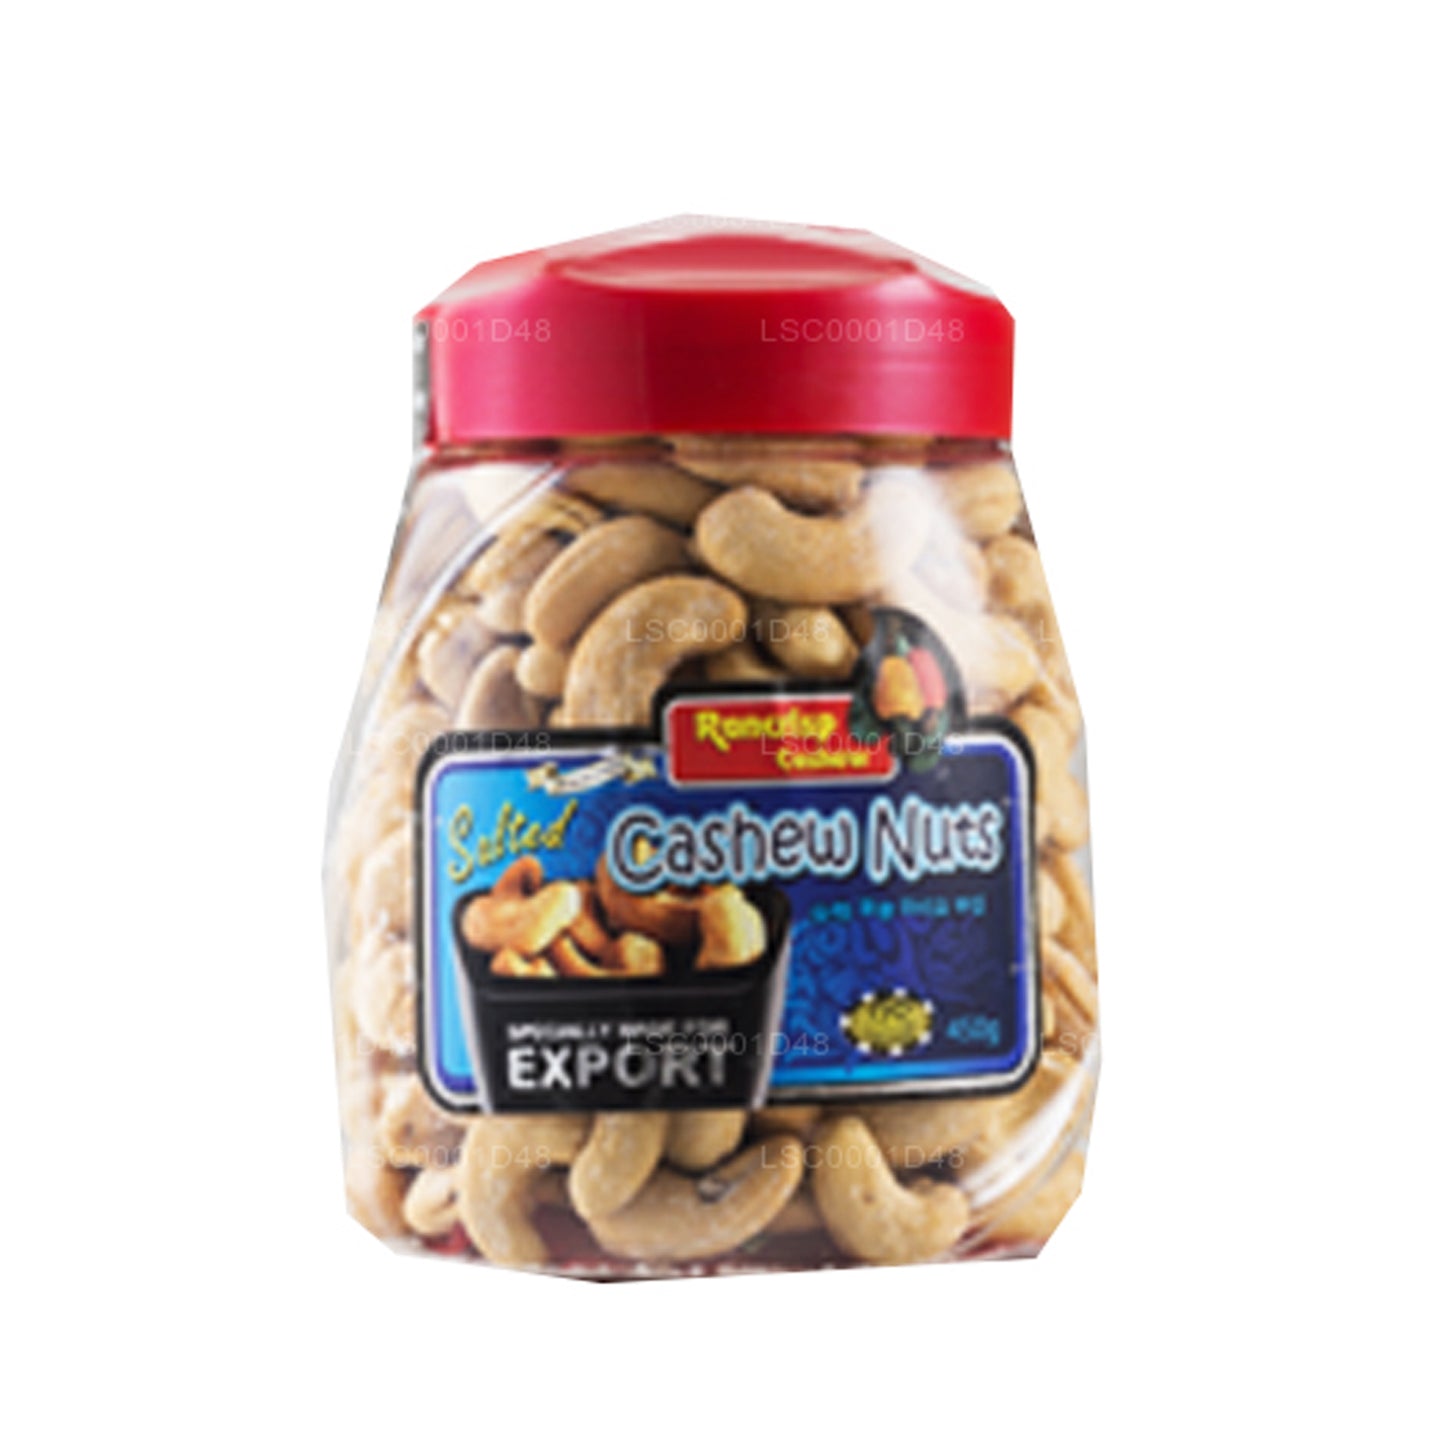 Rancrisp Salted Cashew Nuts (450g)